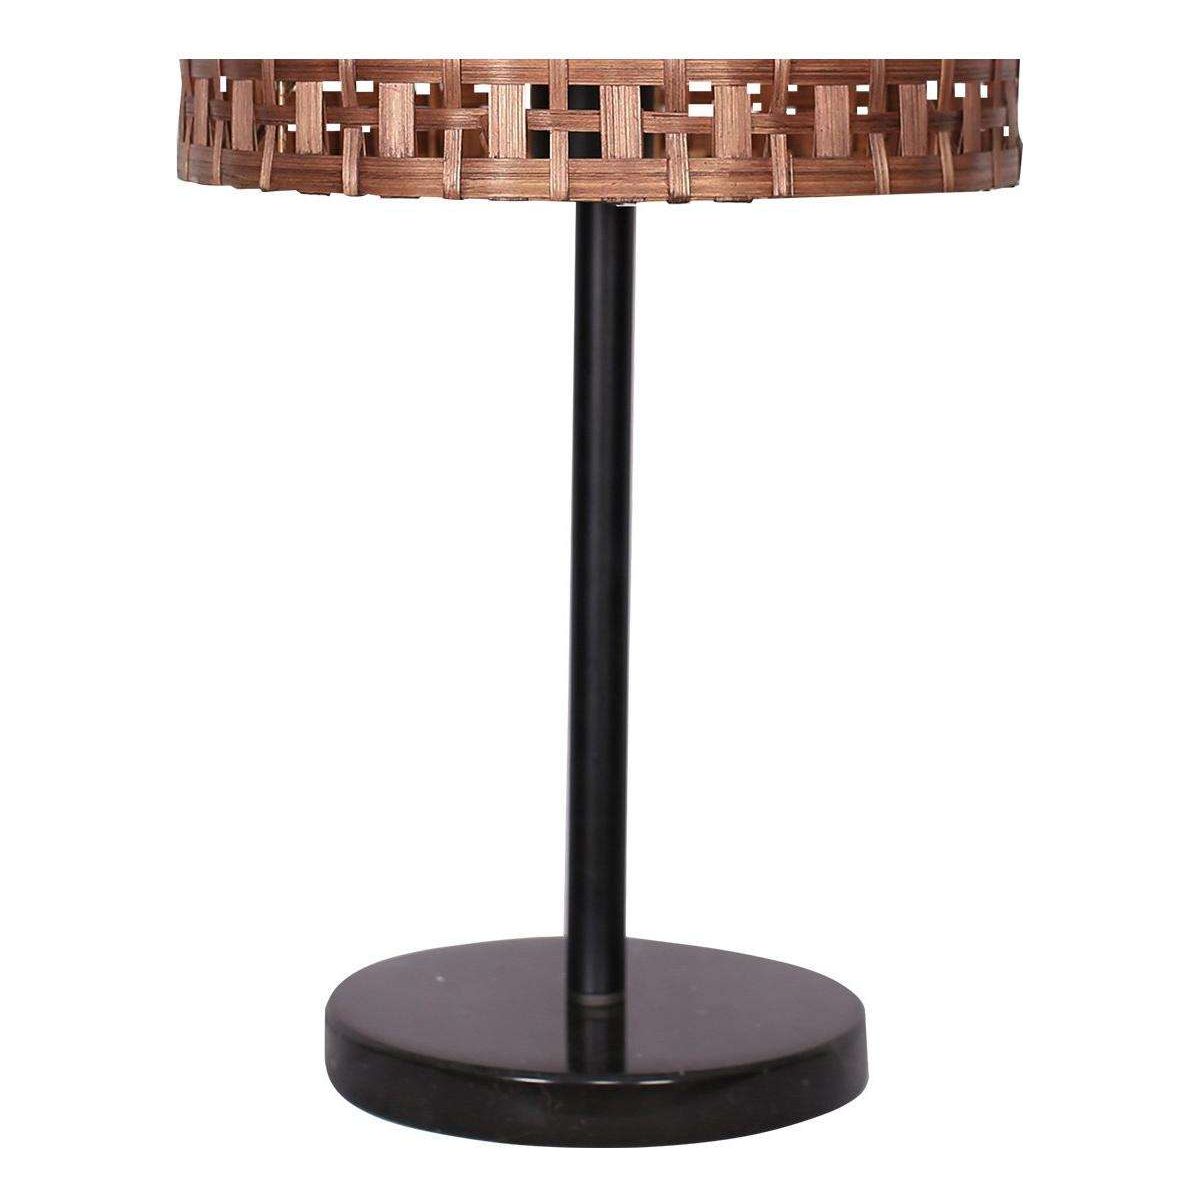 Sarantino Rattan Desk Lamp With Black Marble Base